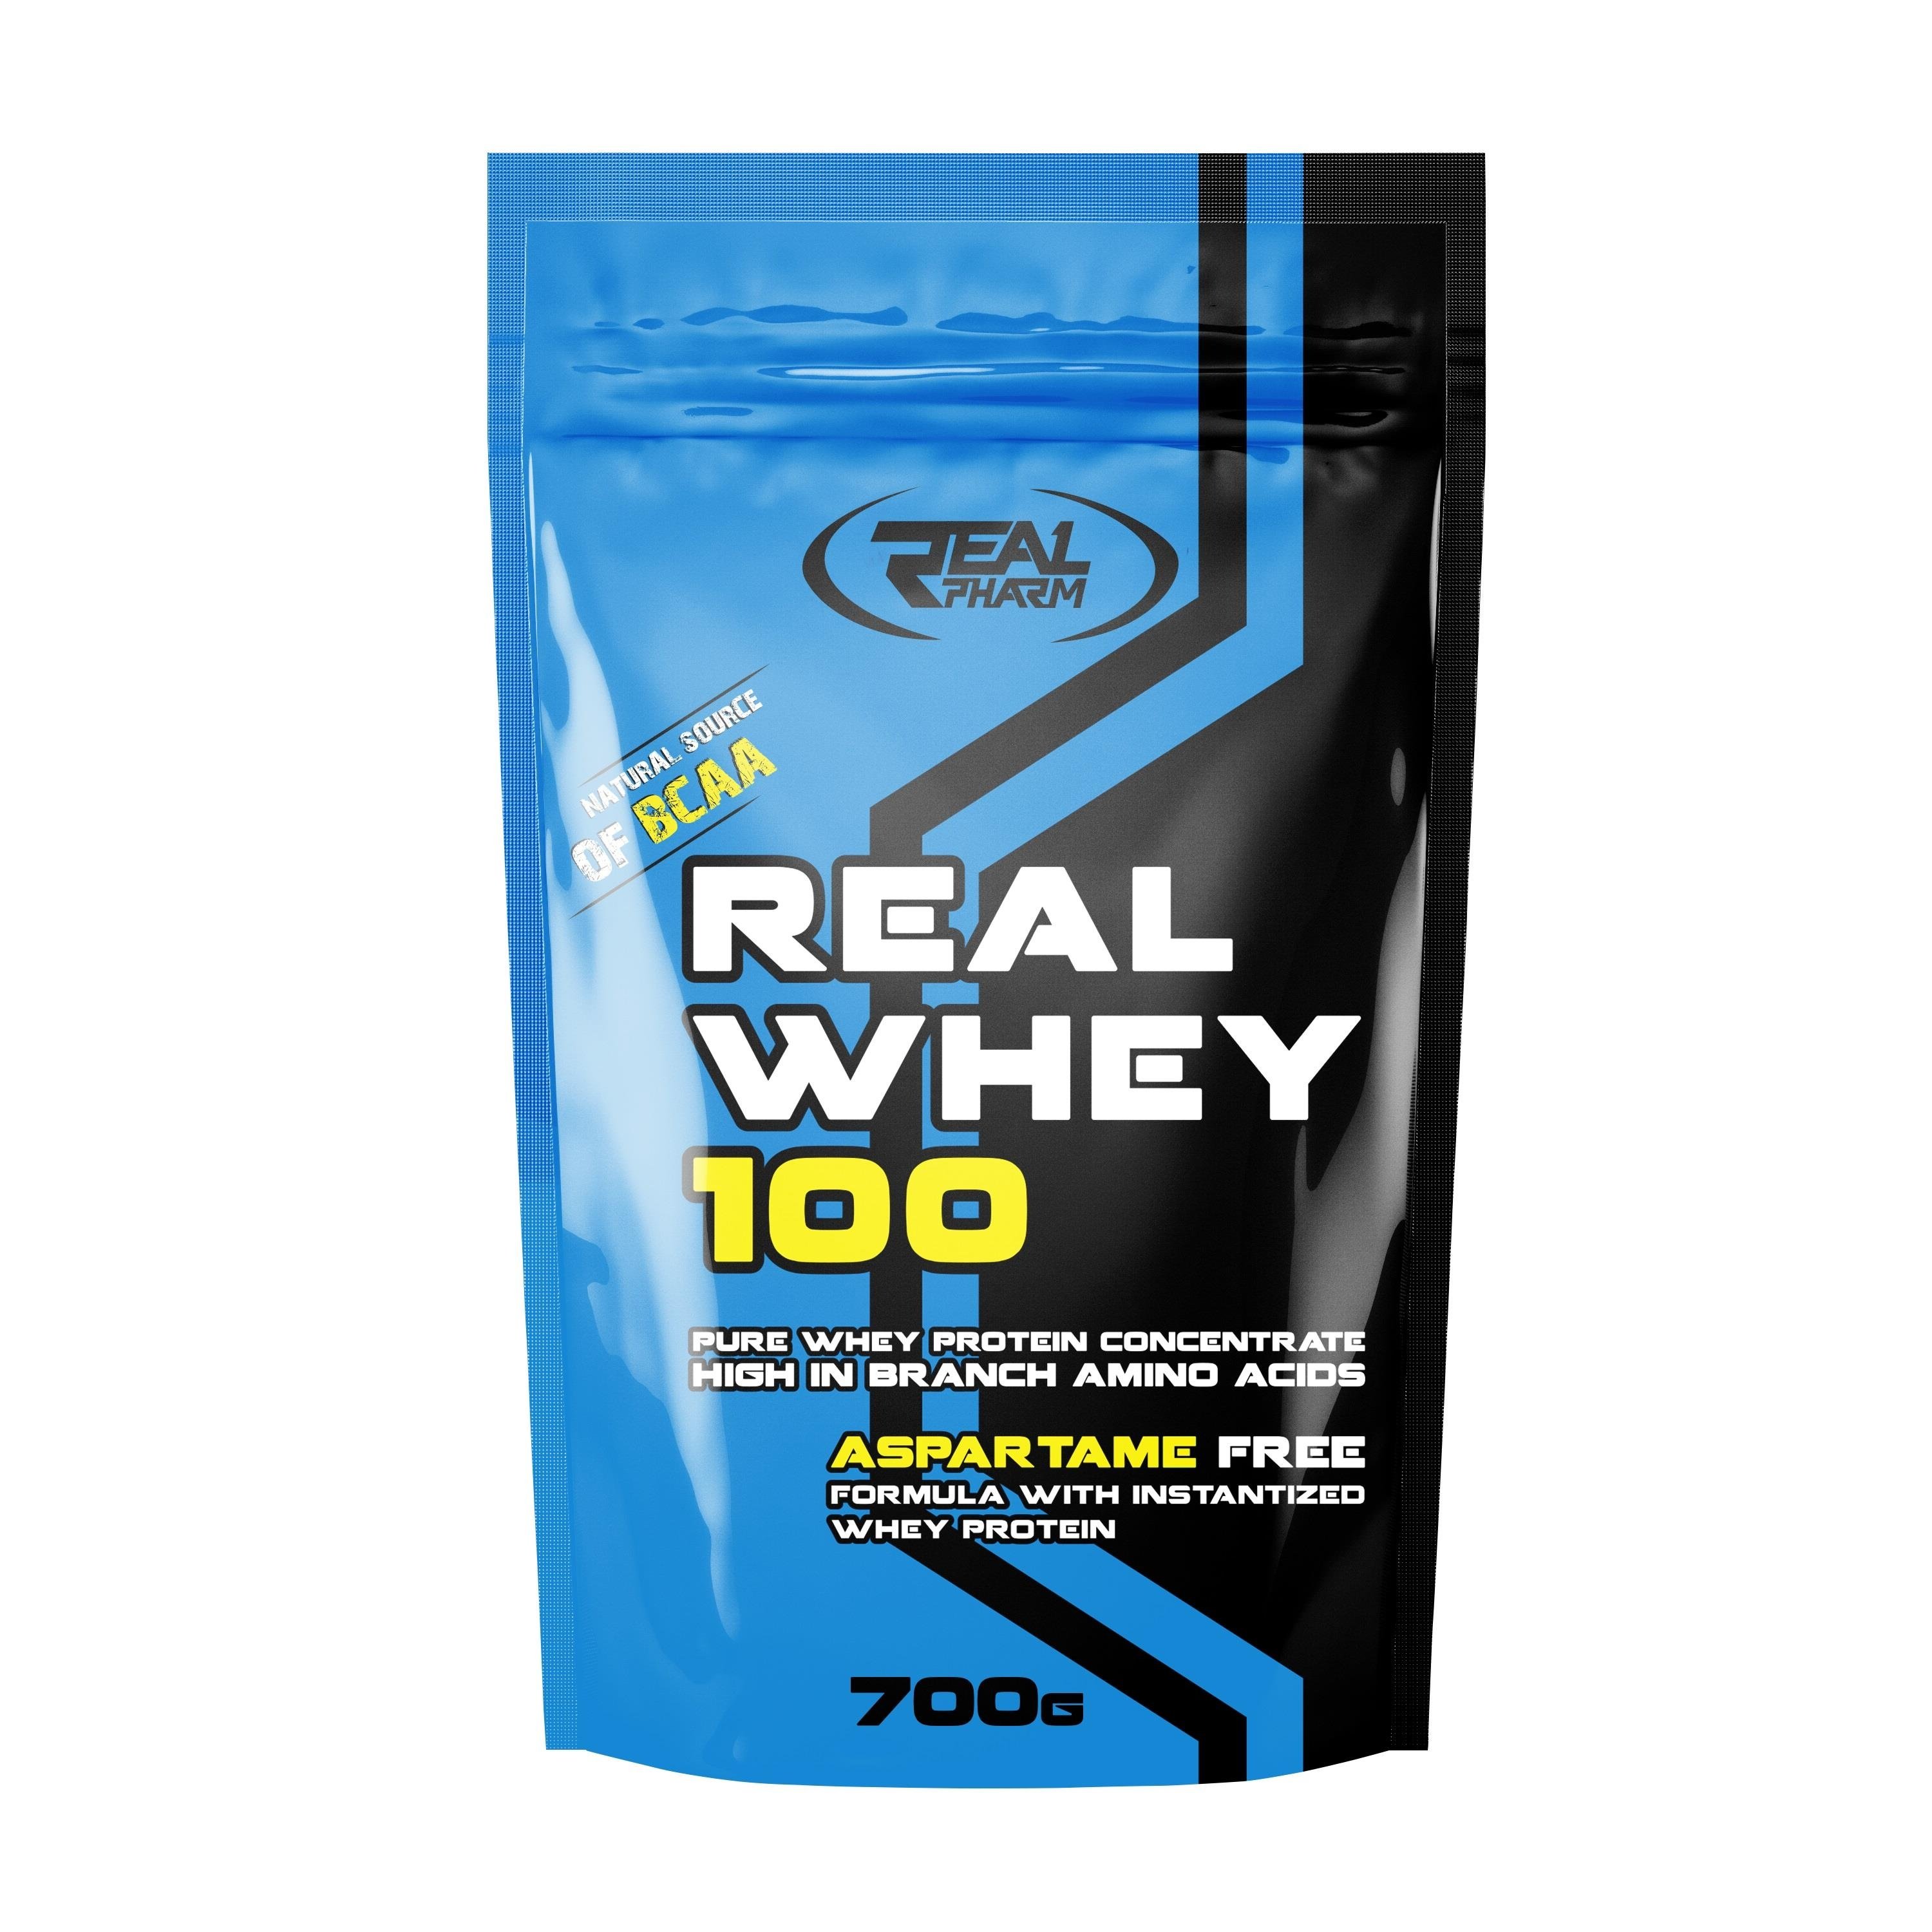 Real Whey 100, 700 g, Real Pharm. Whey Concentrate. Mass Gain स्वास्थ्य लाभ Anti-catabolic properties 